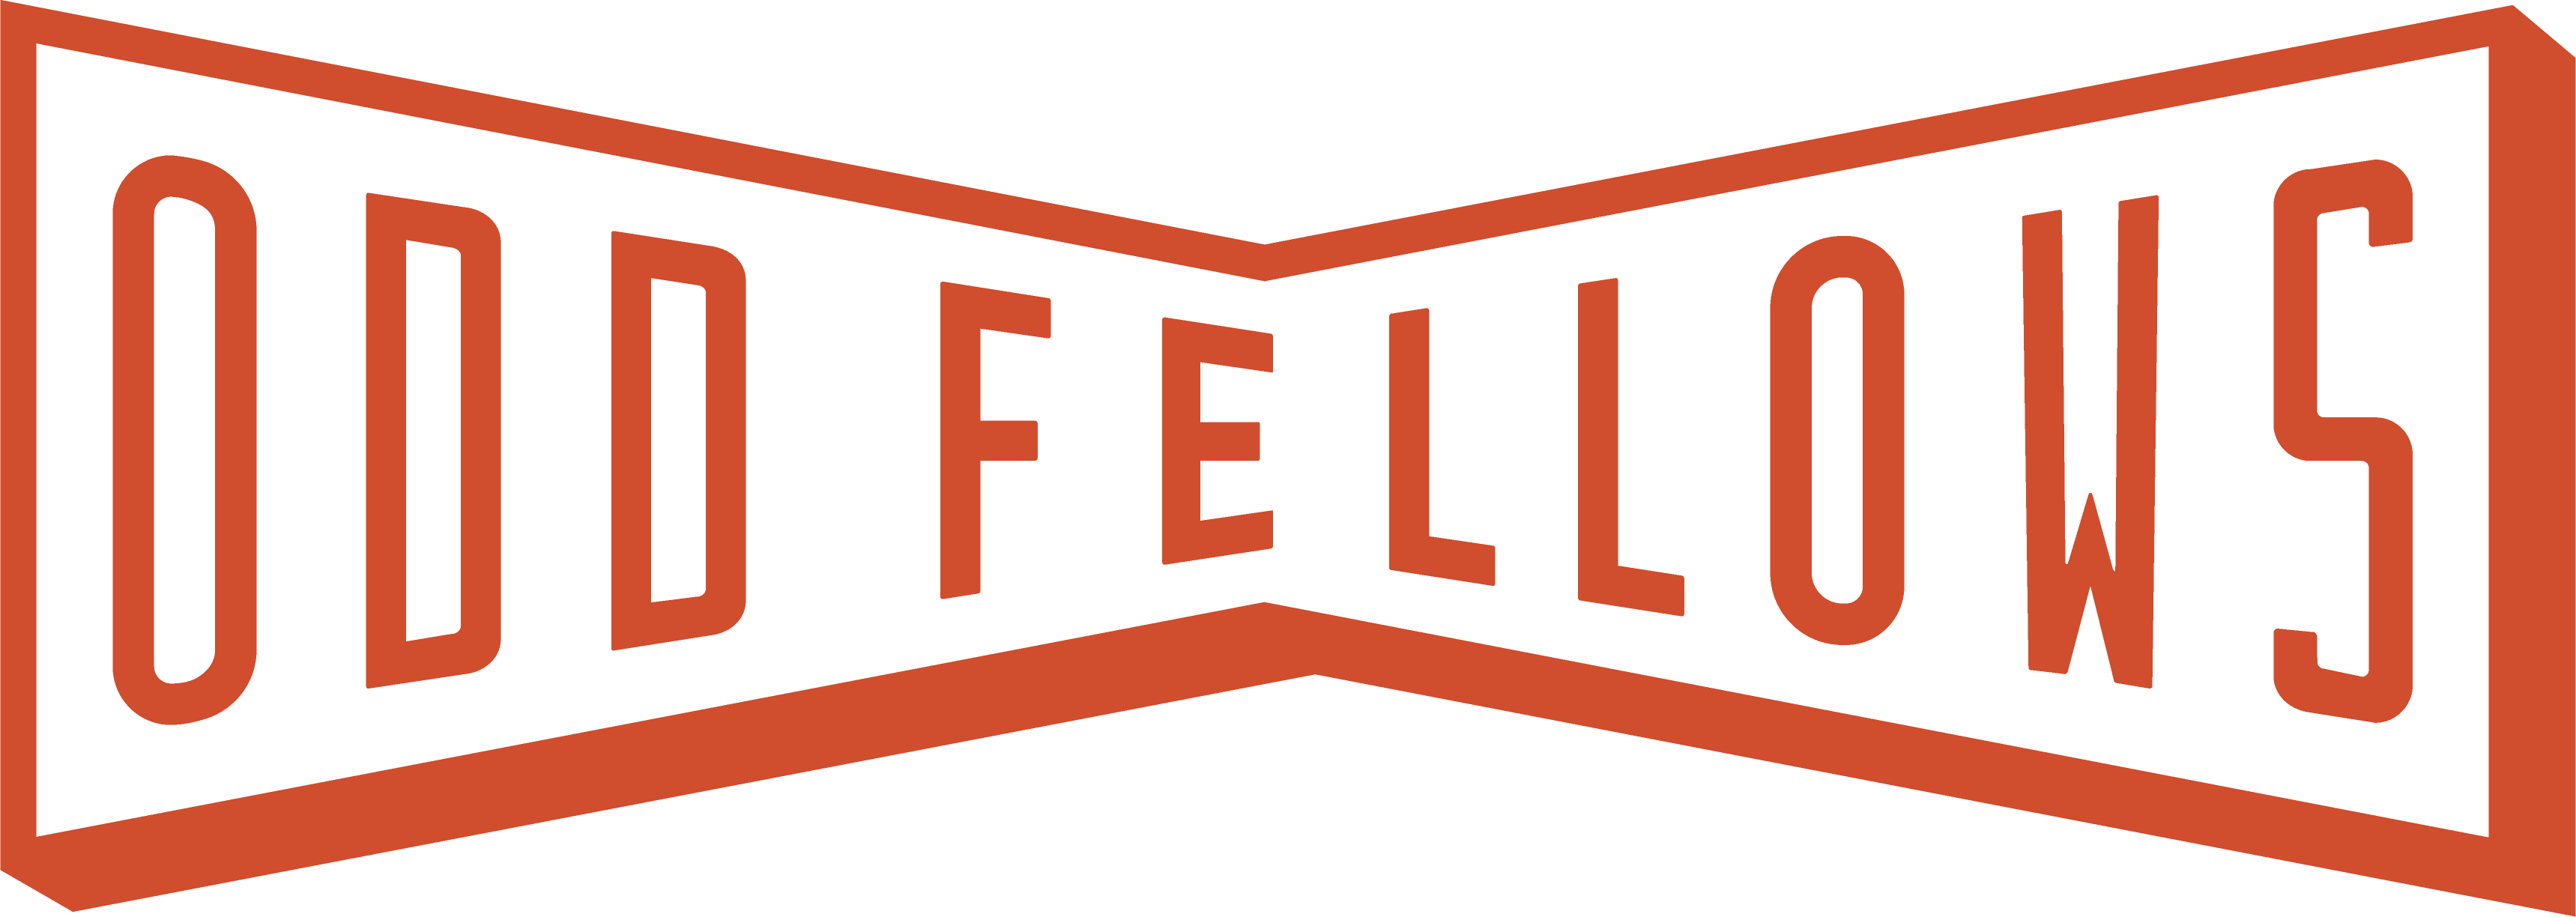 OddFellows-logo